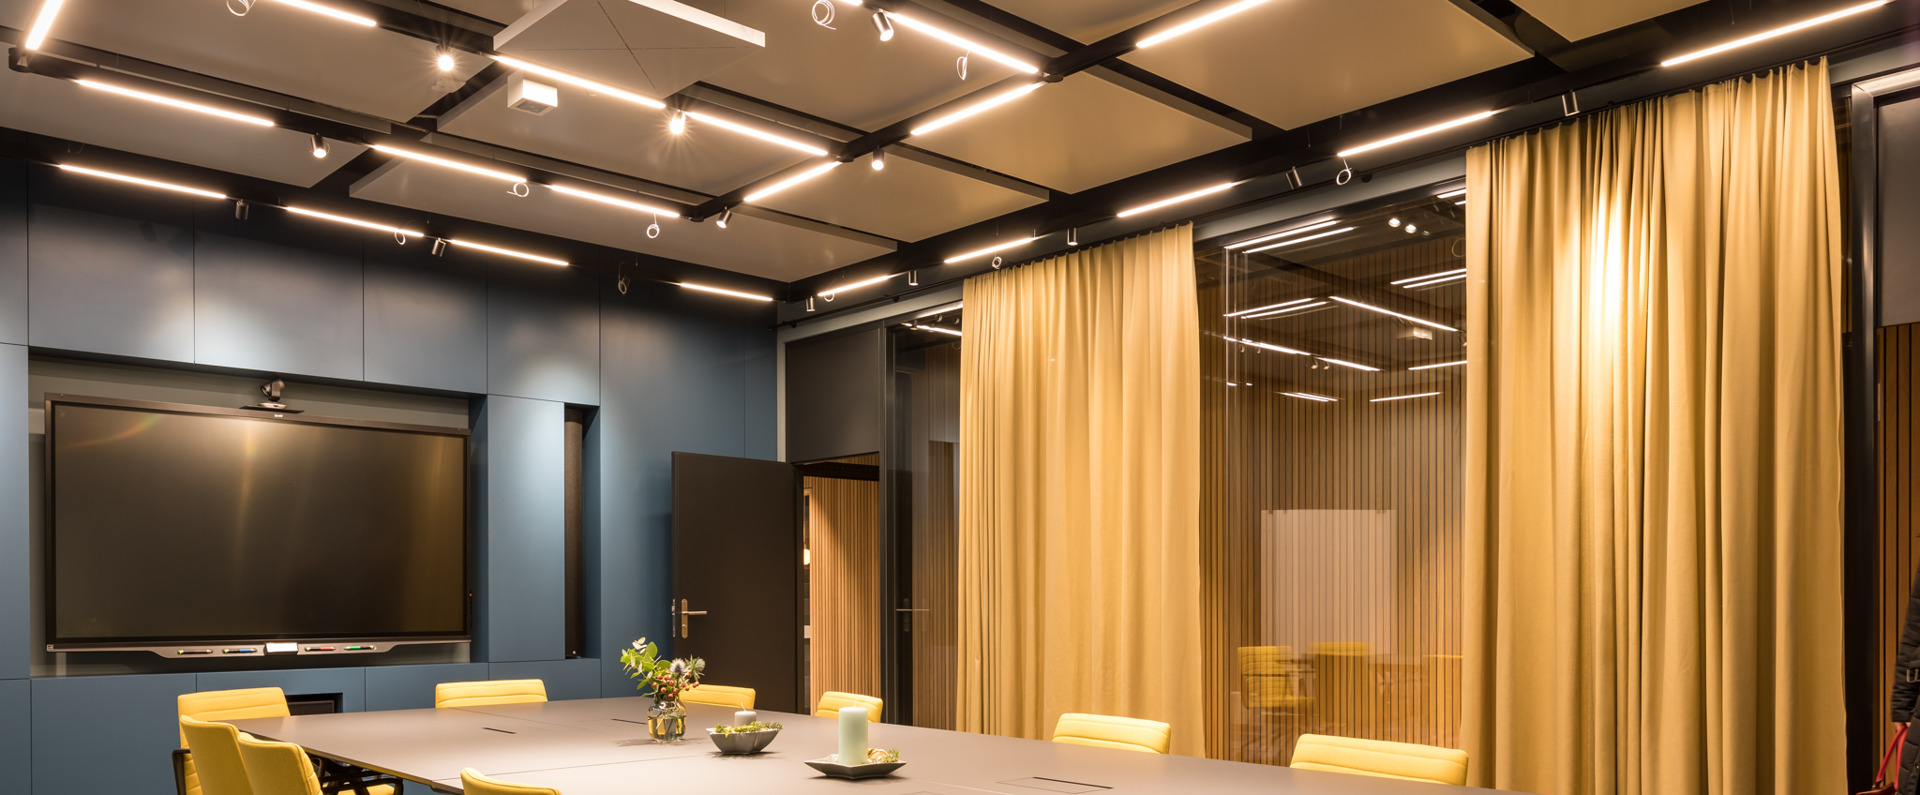 Coworking Lounge in Zurich Deploys Sennheiser TeamConnect Ceiling 2